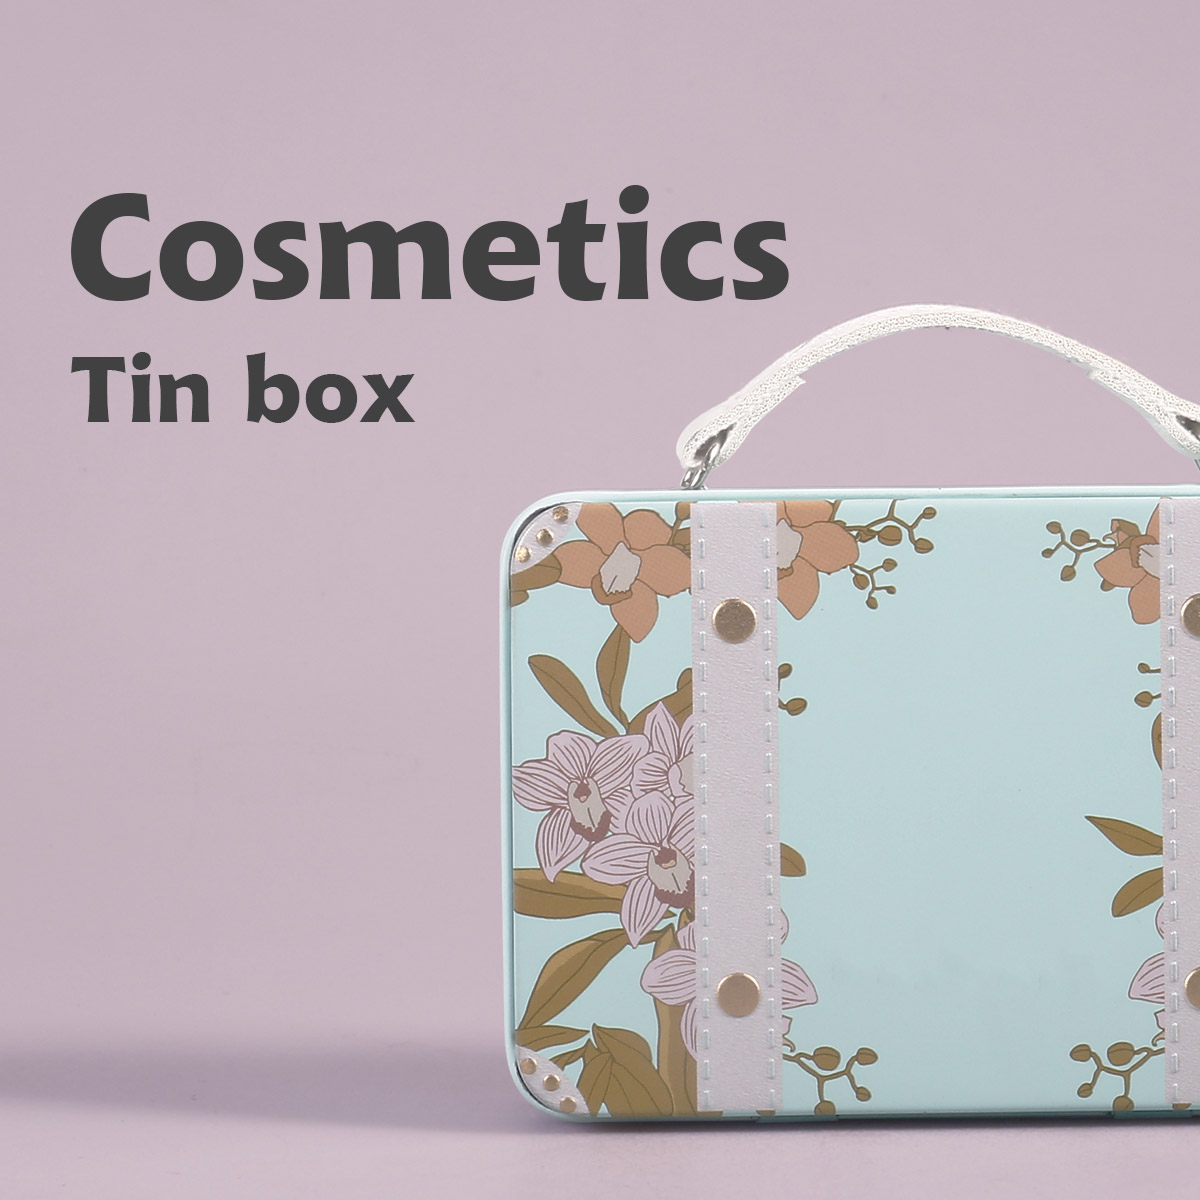 Cosmetics Tin box